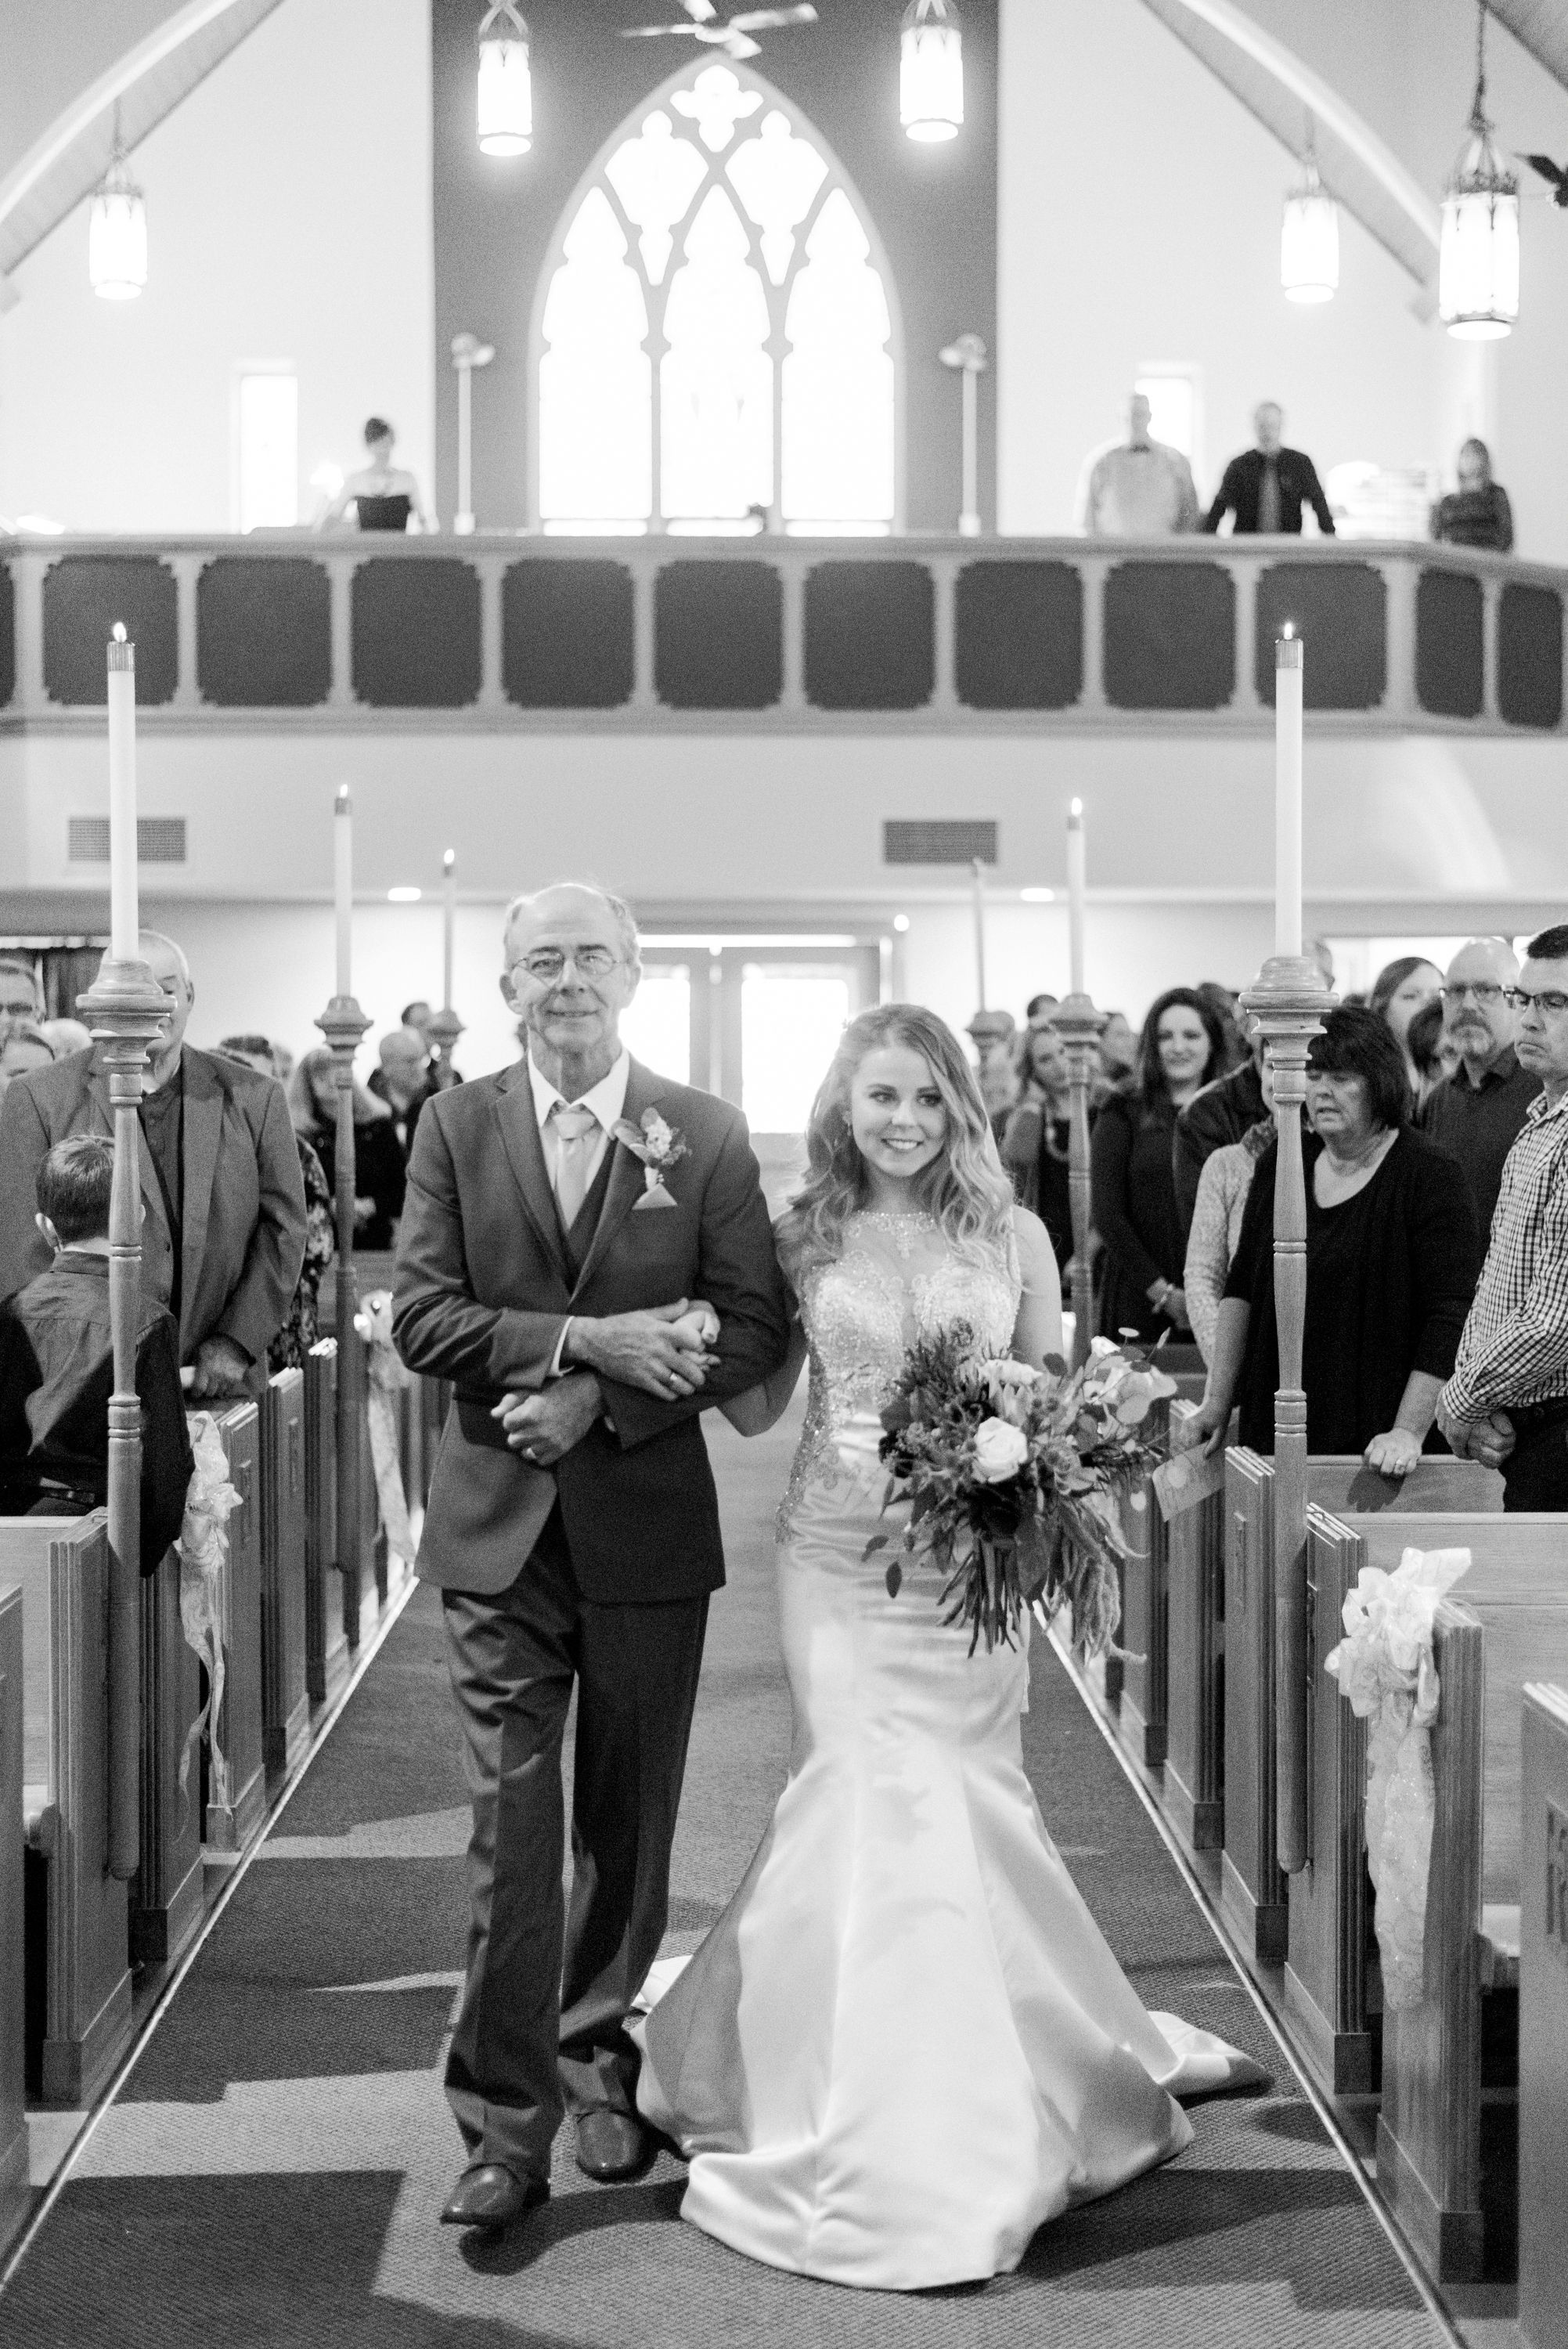 McClenahan Wedding -   15 wedding Church inspiration ideas